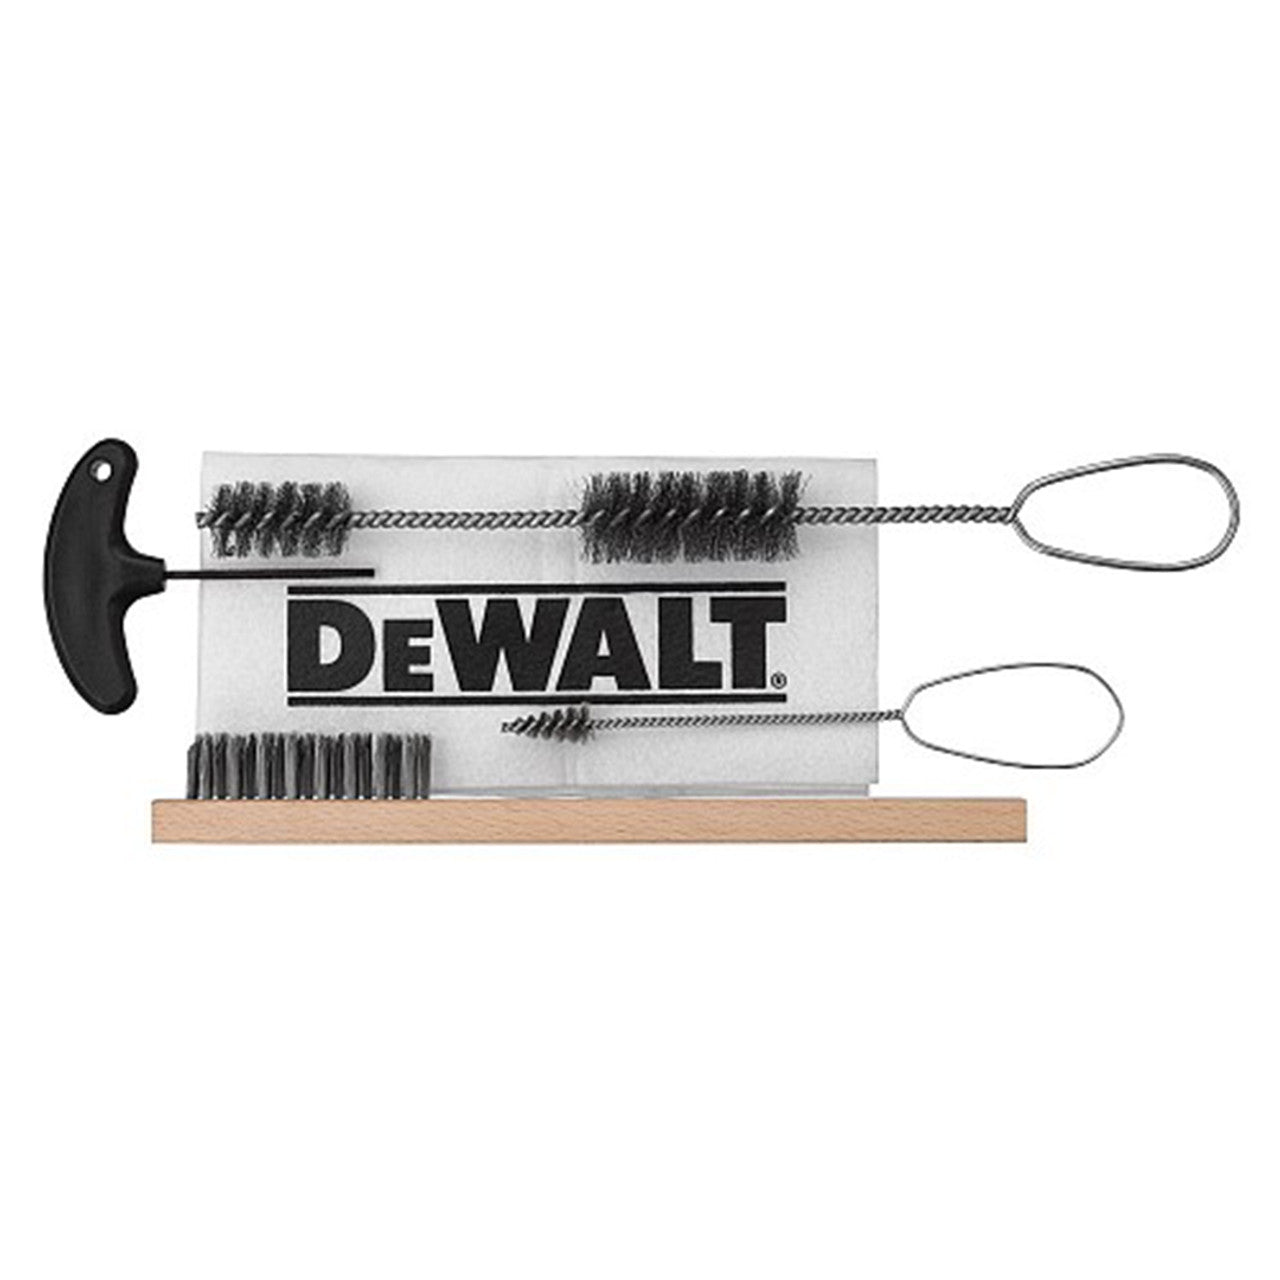 DEWALT DEW-DFD2704 Cleaning Kit for DFD270